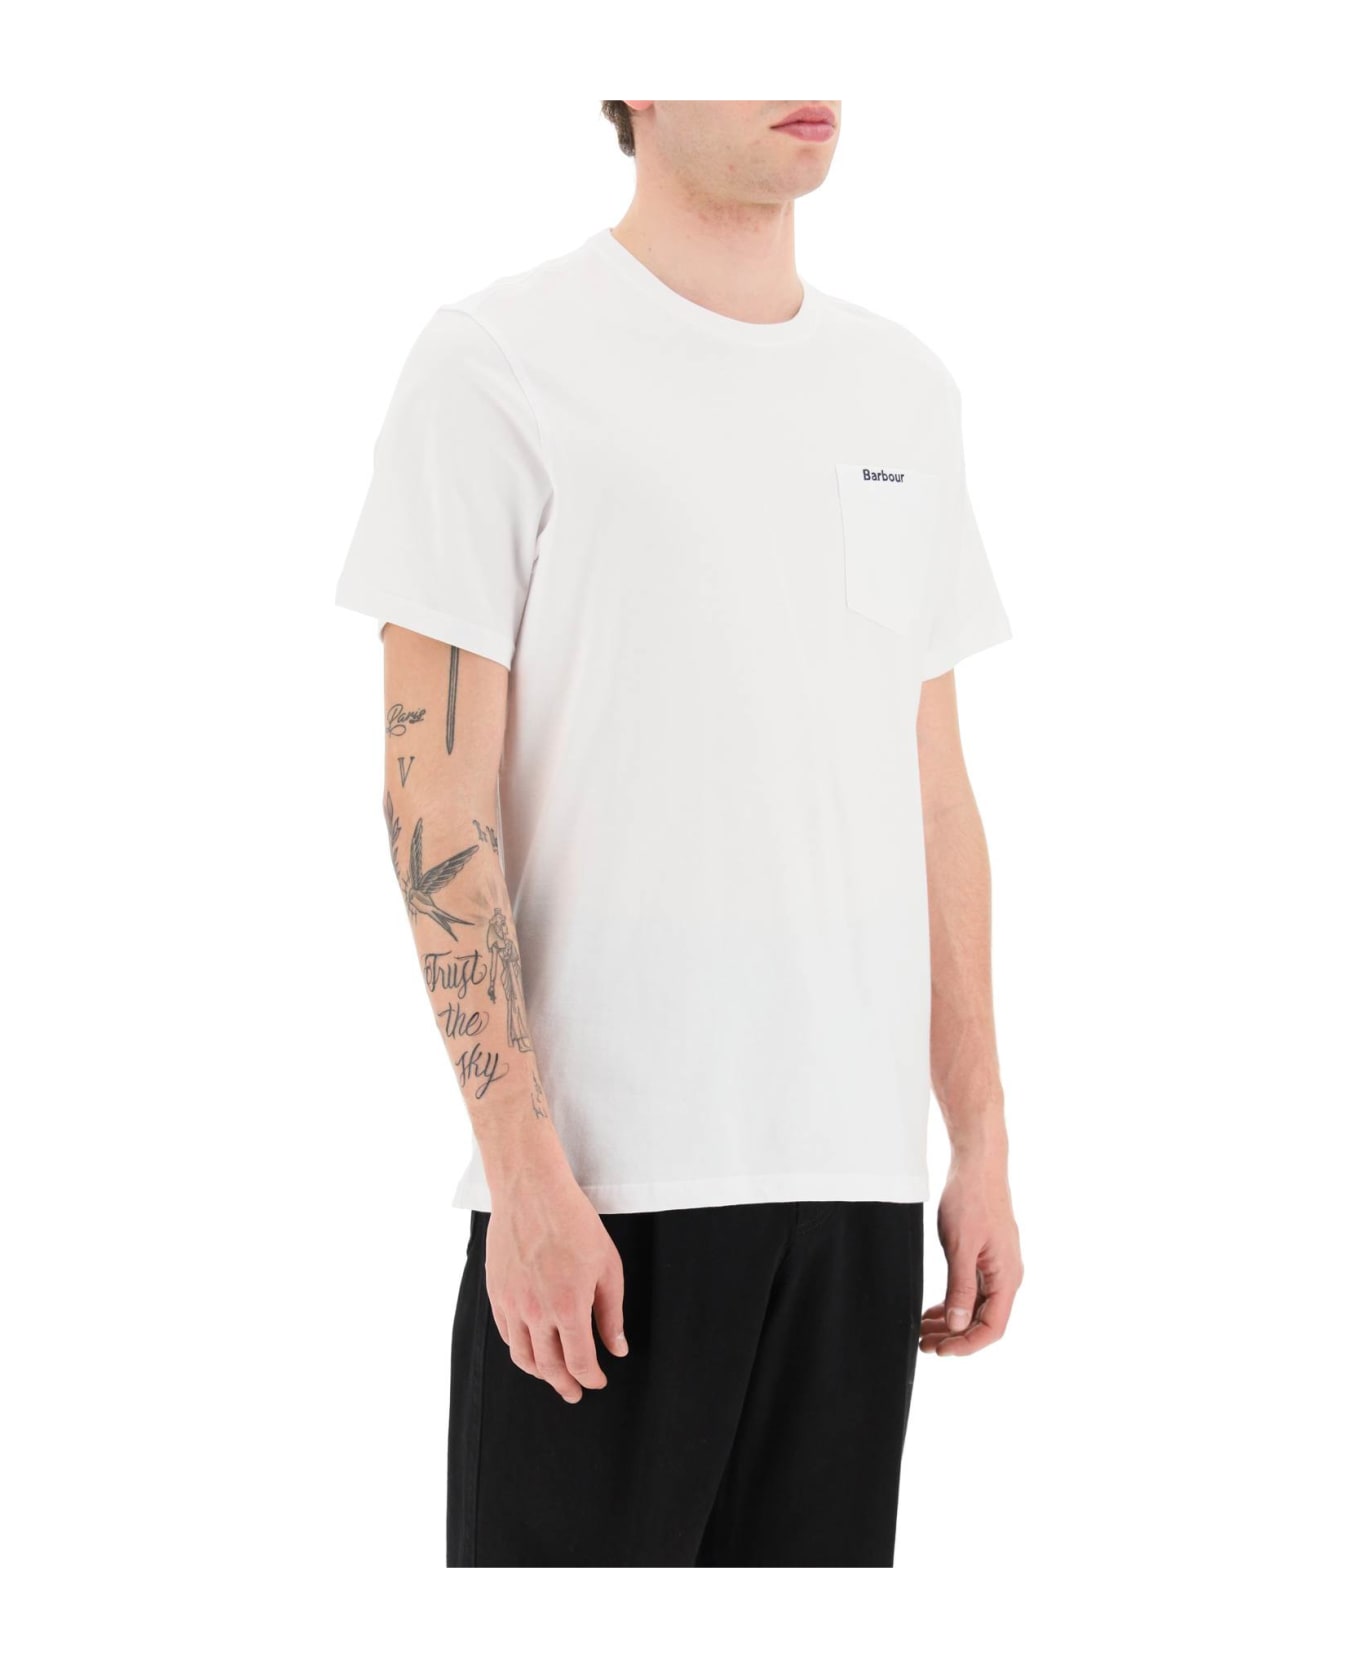 Barbour Classic Chest Pocket T-shirt - WHITE (White) シャツ